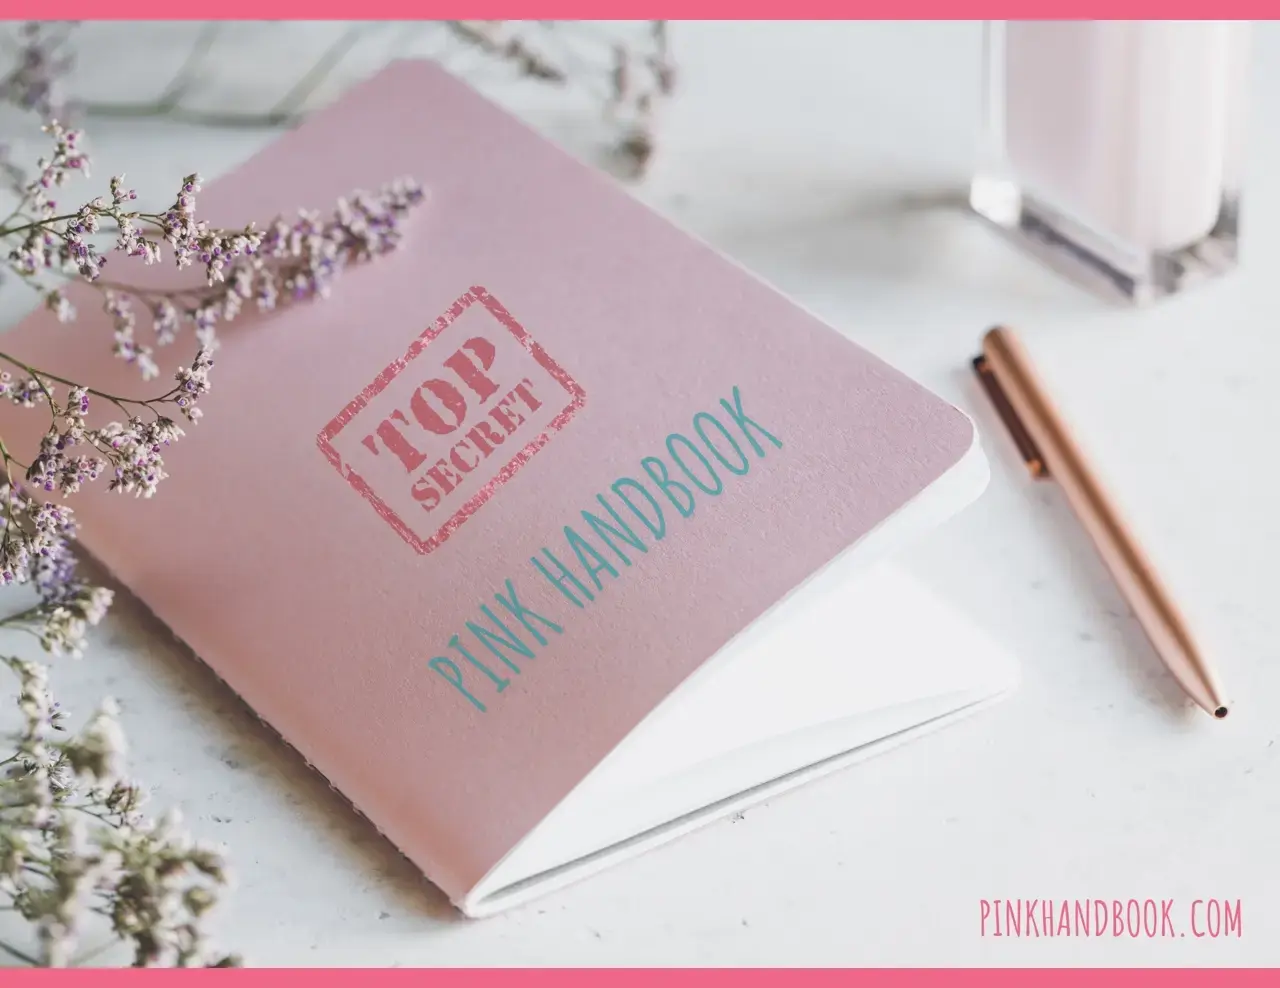 Pink Handbook